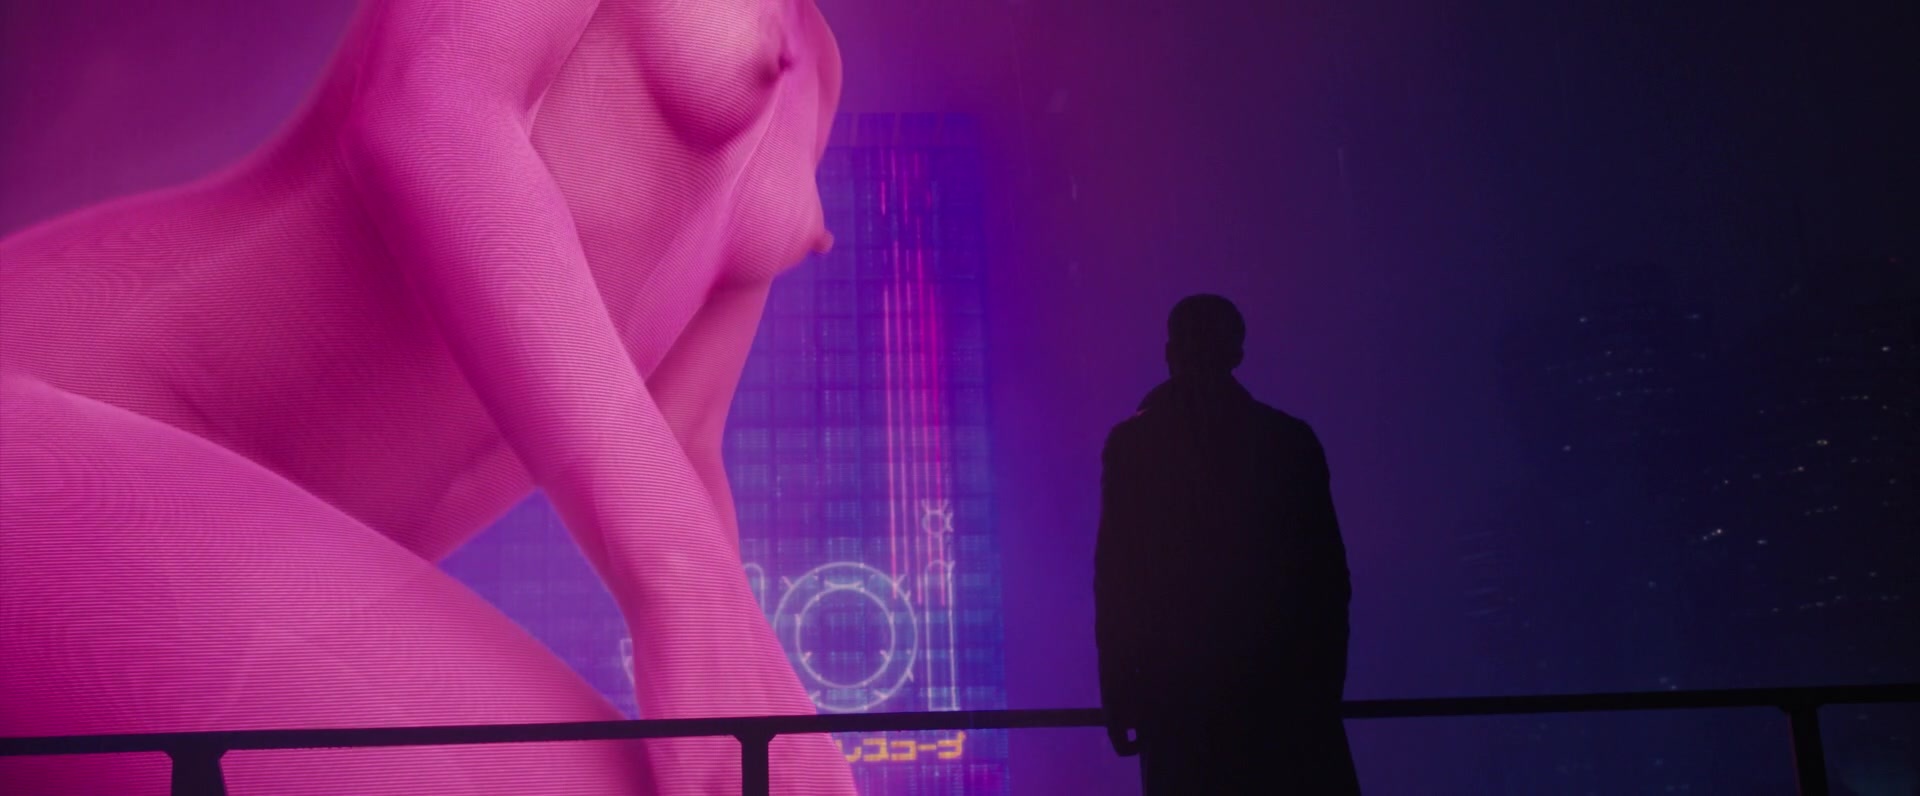 Blade Runner Nudes